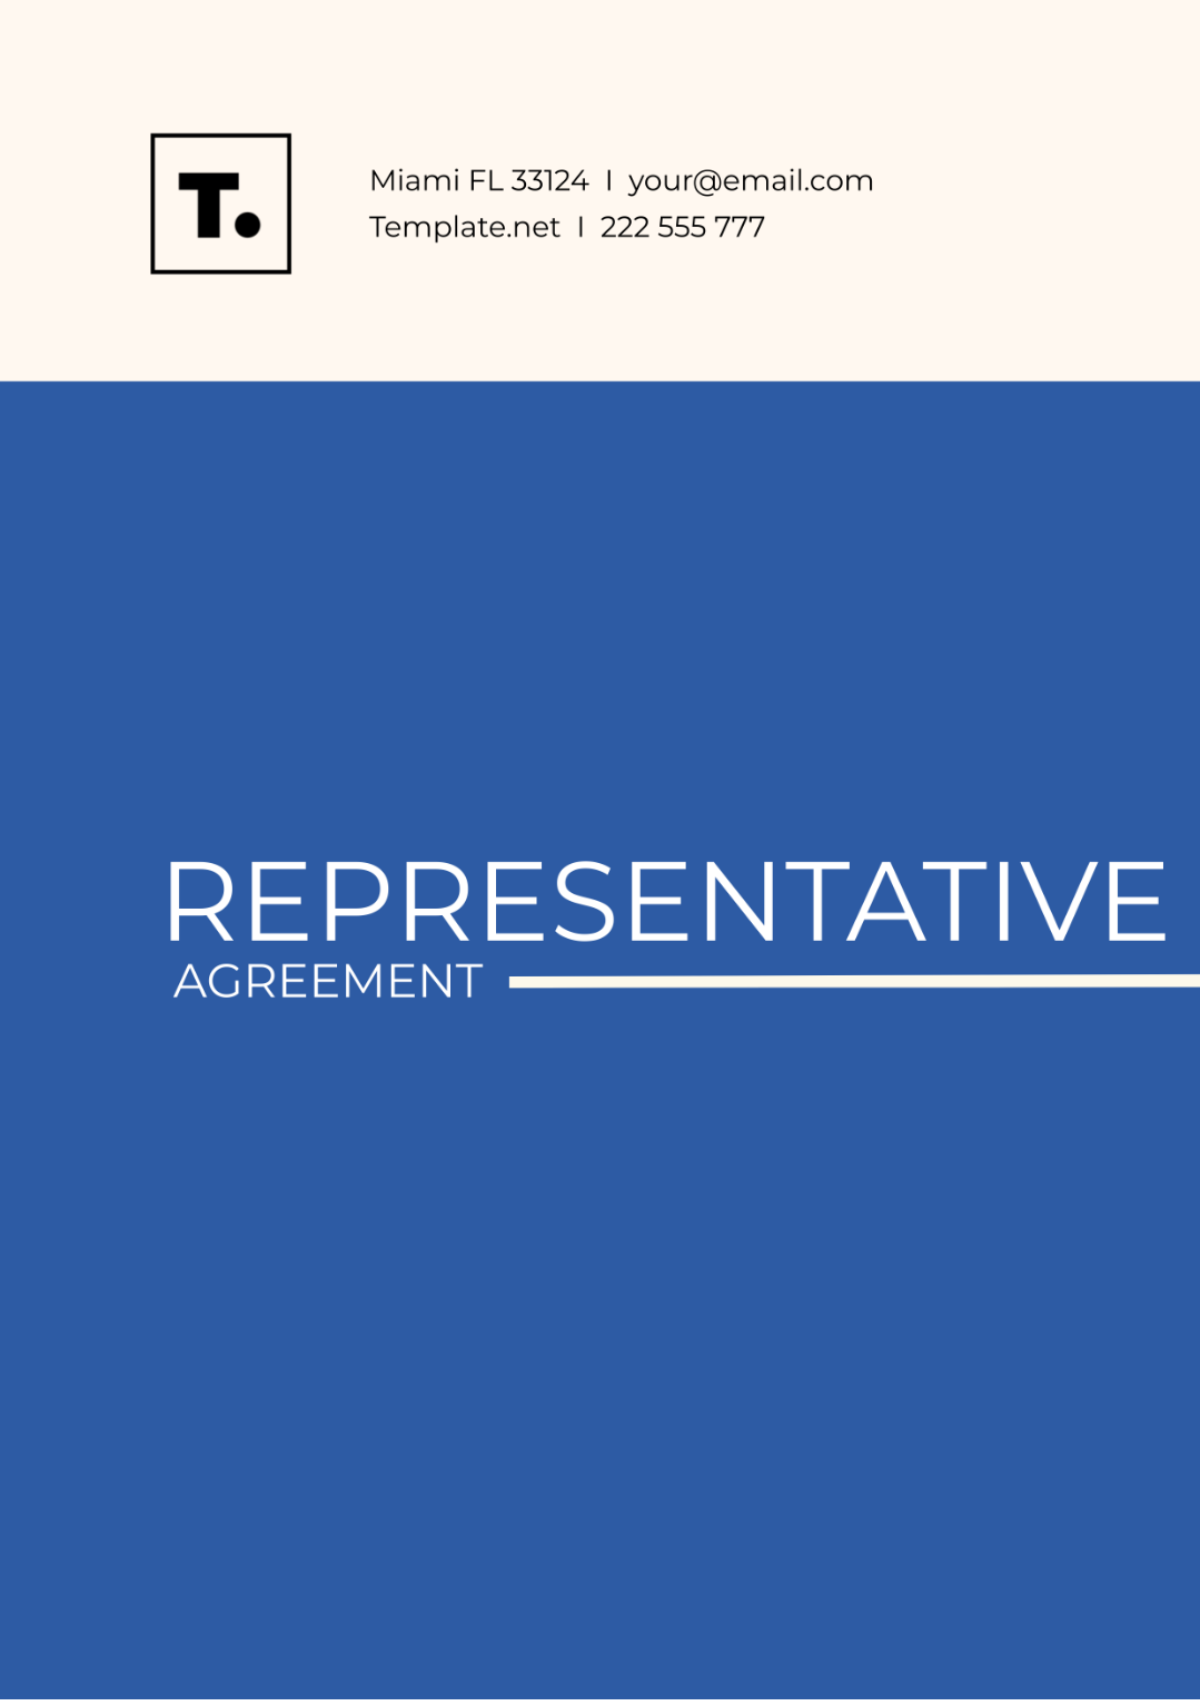 Representation Agreement Template